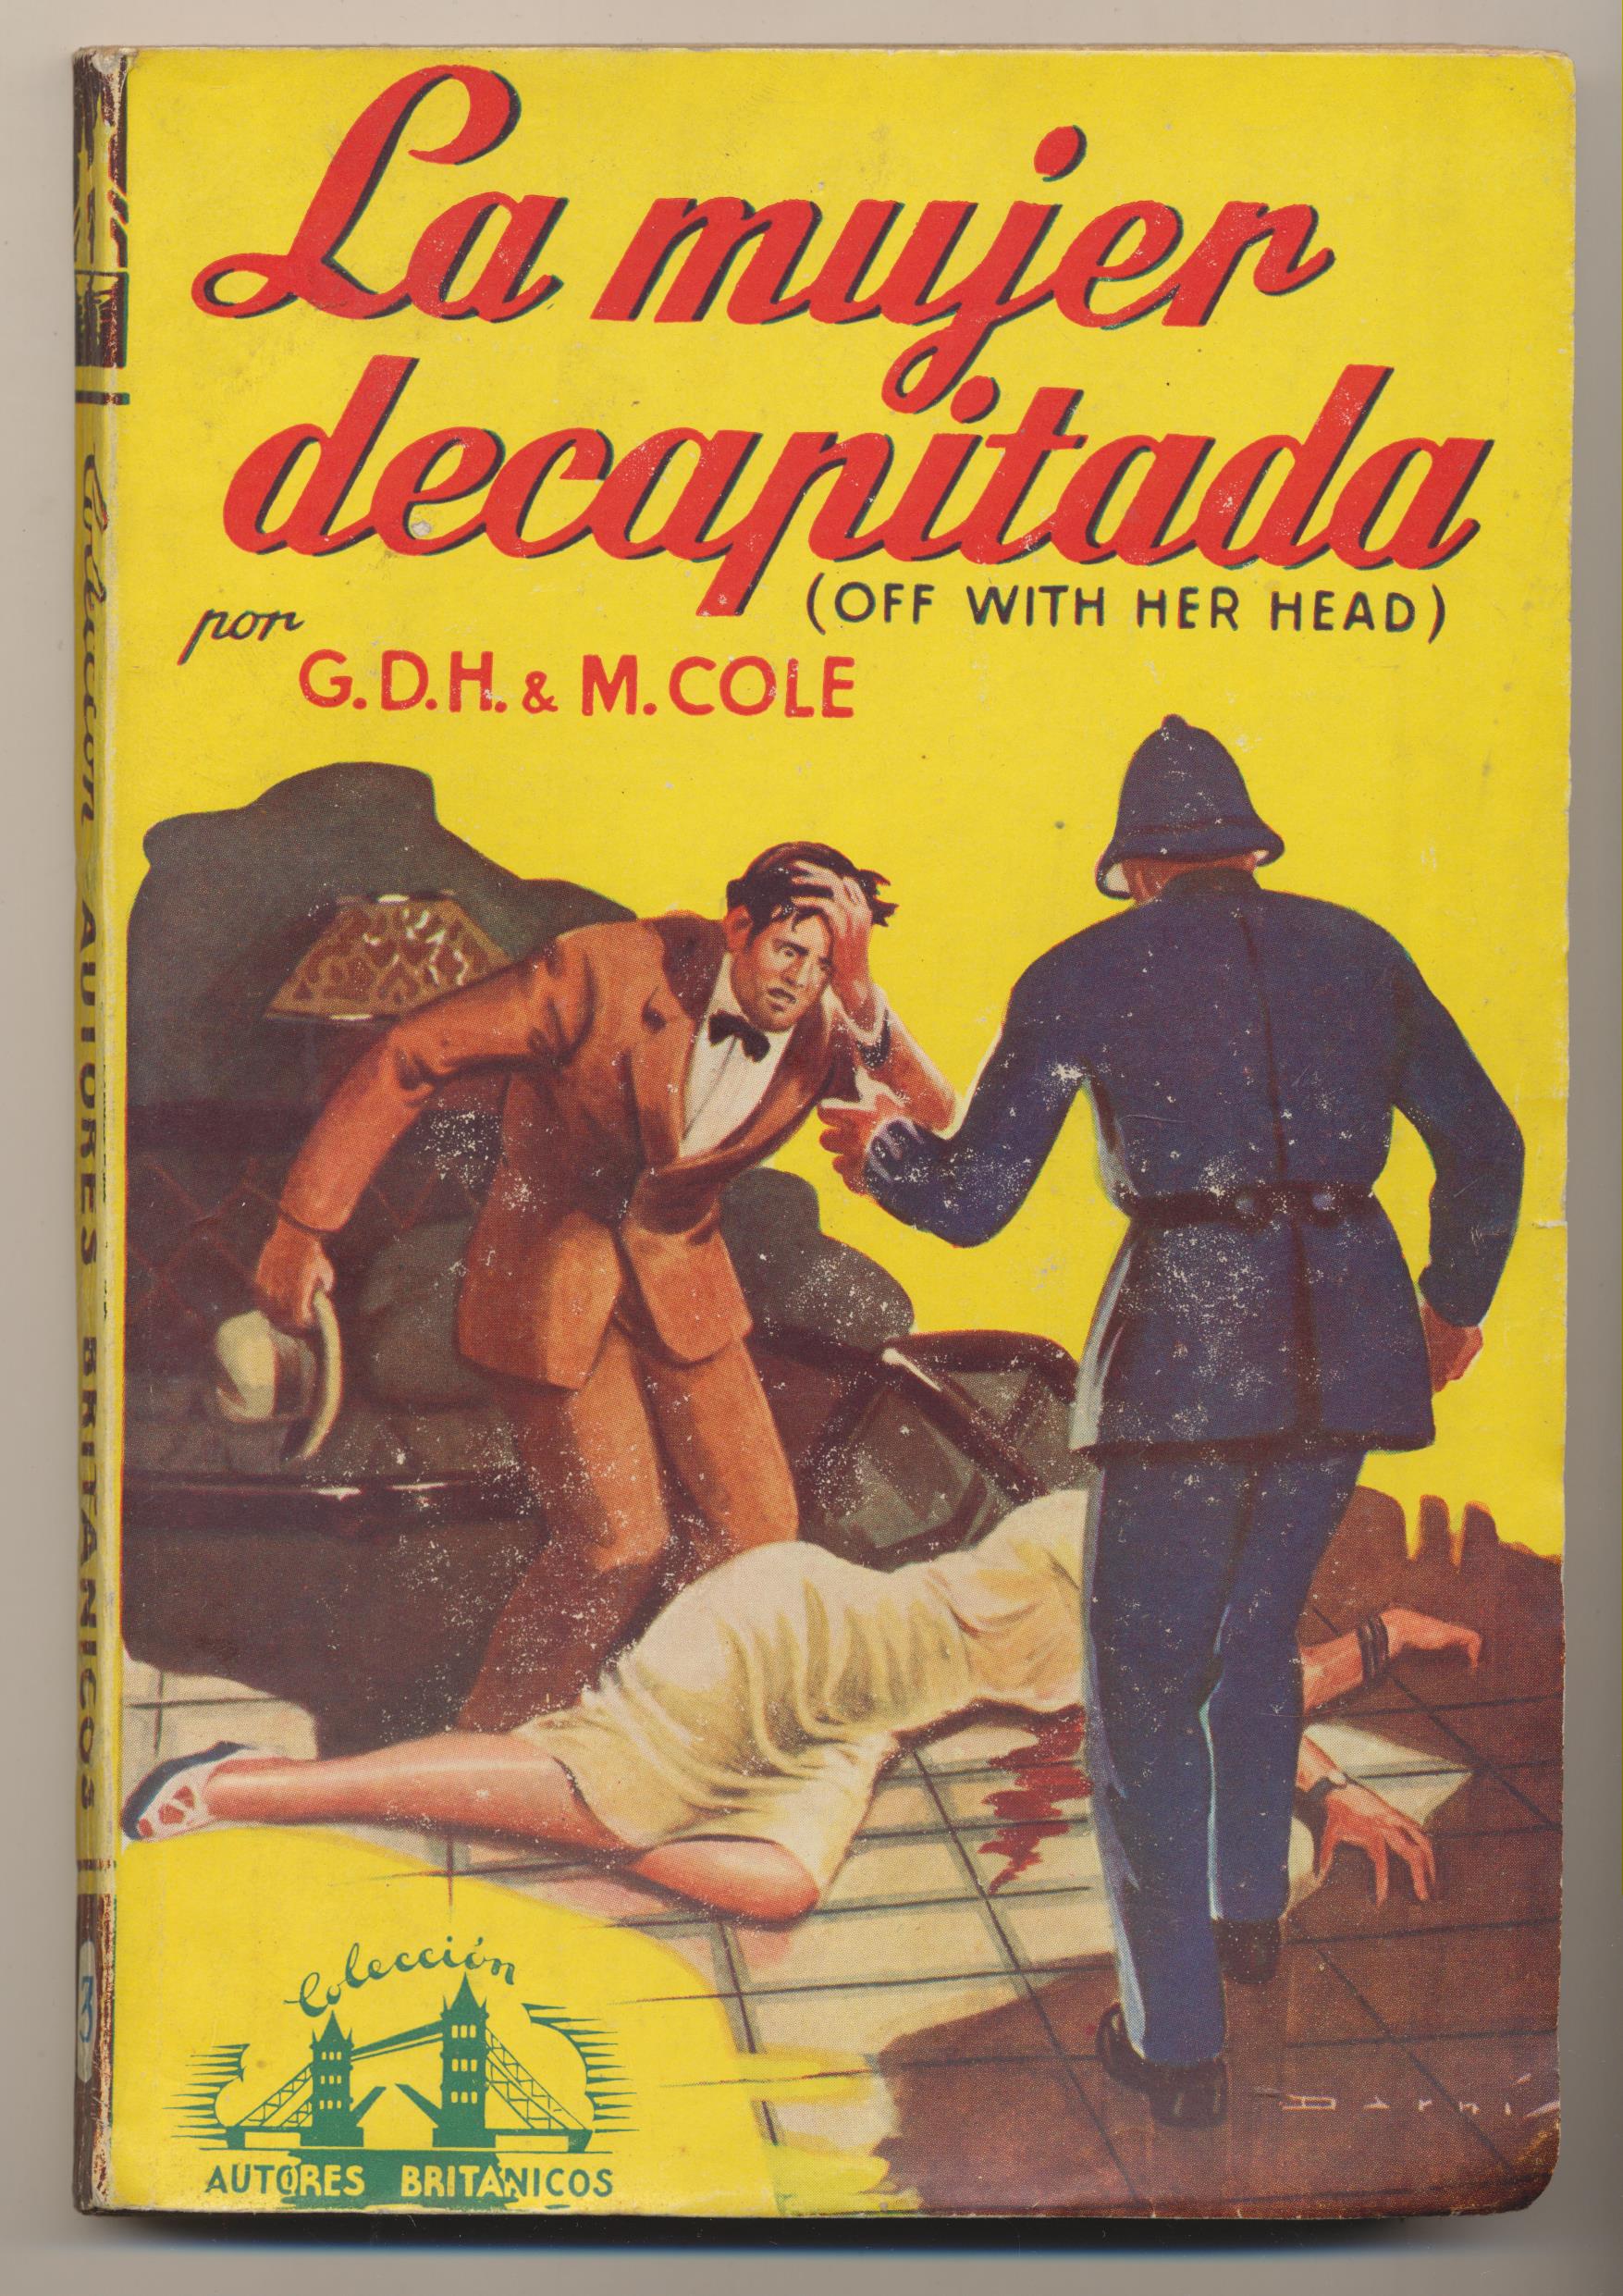 Autores Británicos nº 3. G.D.H. & M. COlé. La mujer decapitada. 1ª Edición Cliper 1946